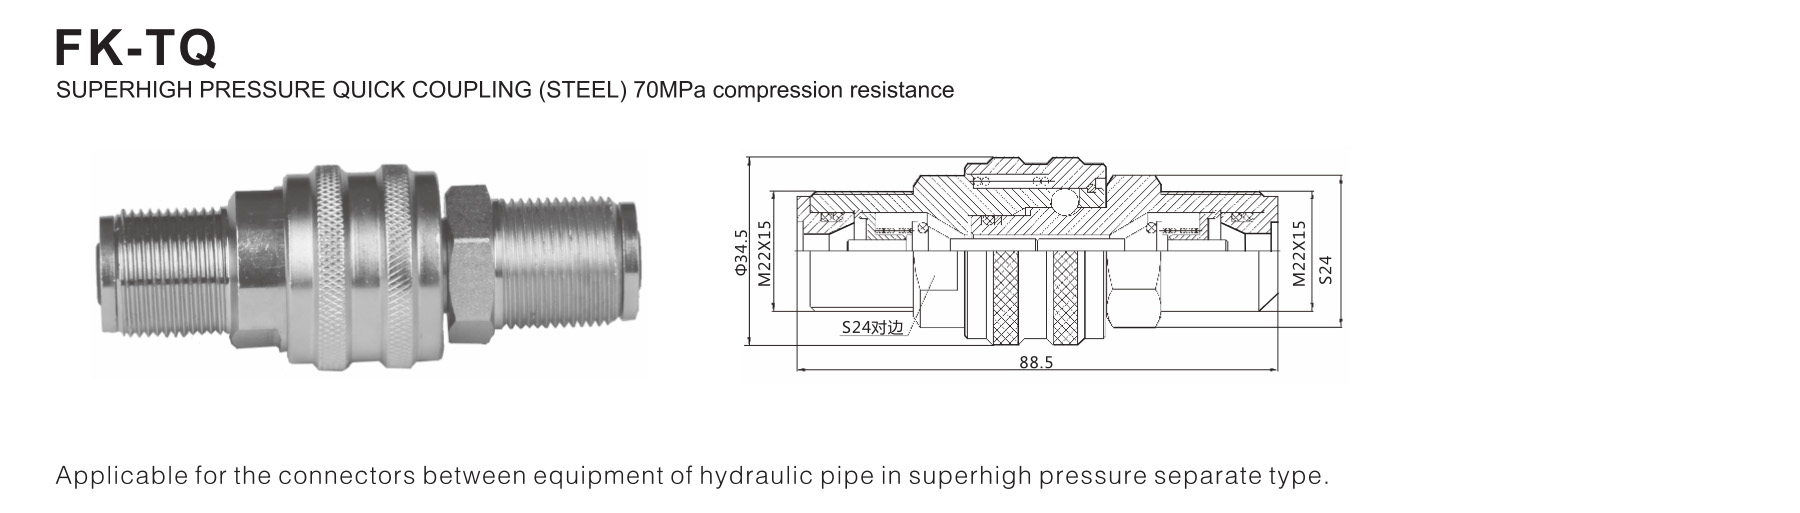 FK-TQ Series supehigh pressure quick coupling